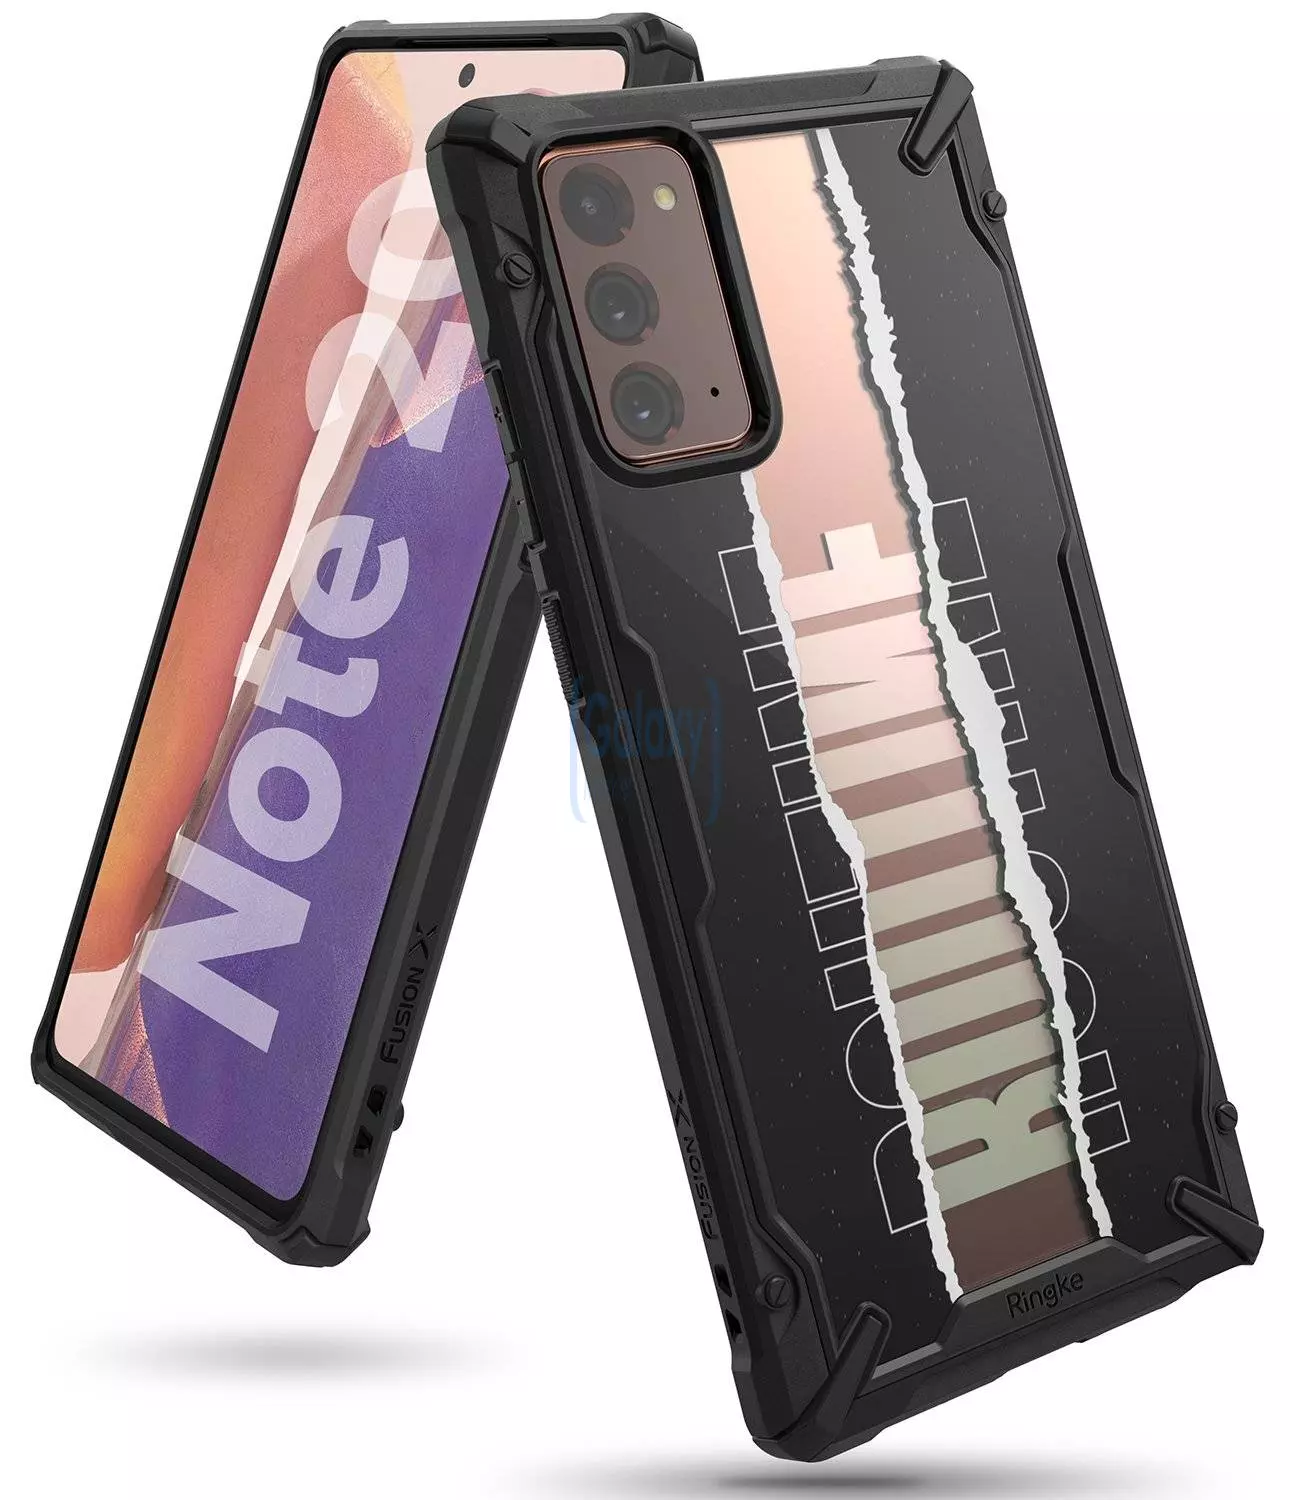 Чехол бампер Ringke Fusion-X Design для Samsung Galaxy Note 20 Routine (Рутина)